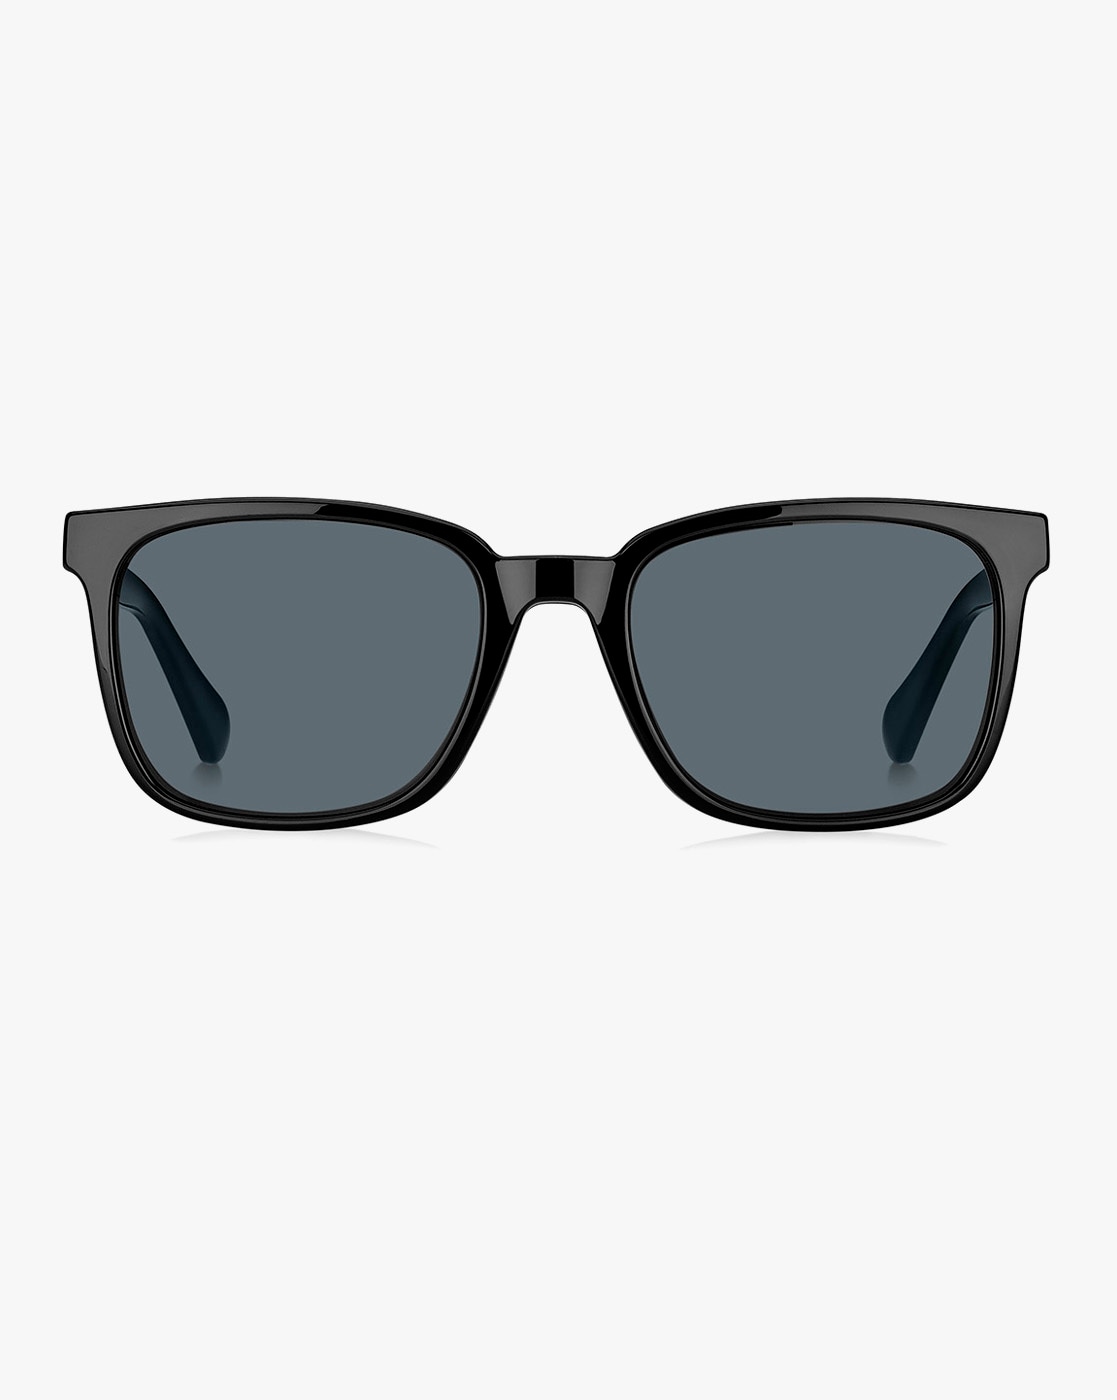 Otherworldly Sunglasses (Black / Black) – Congruent Space *₊˚⁎*₊